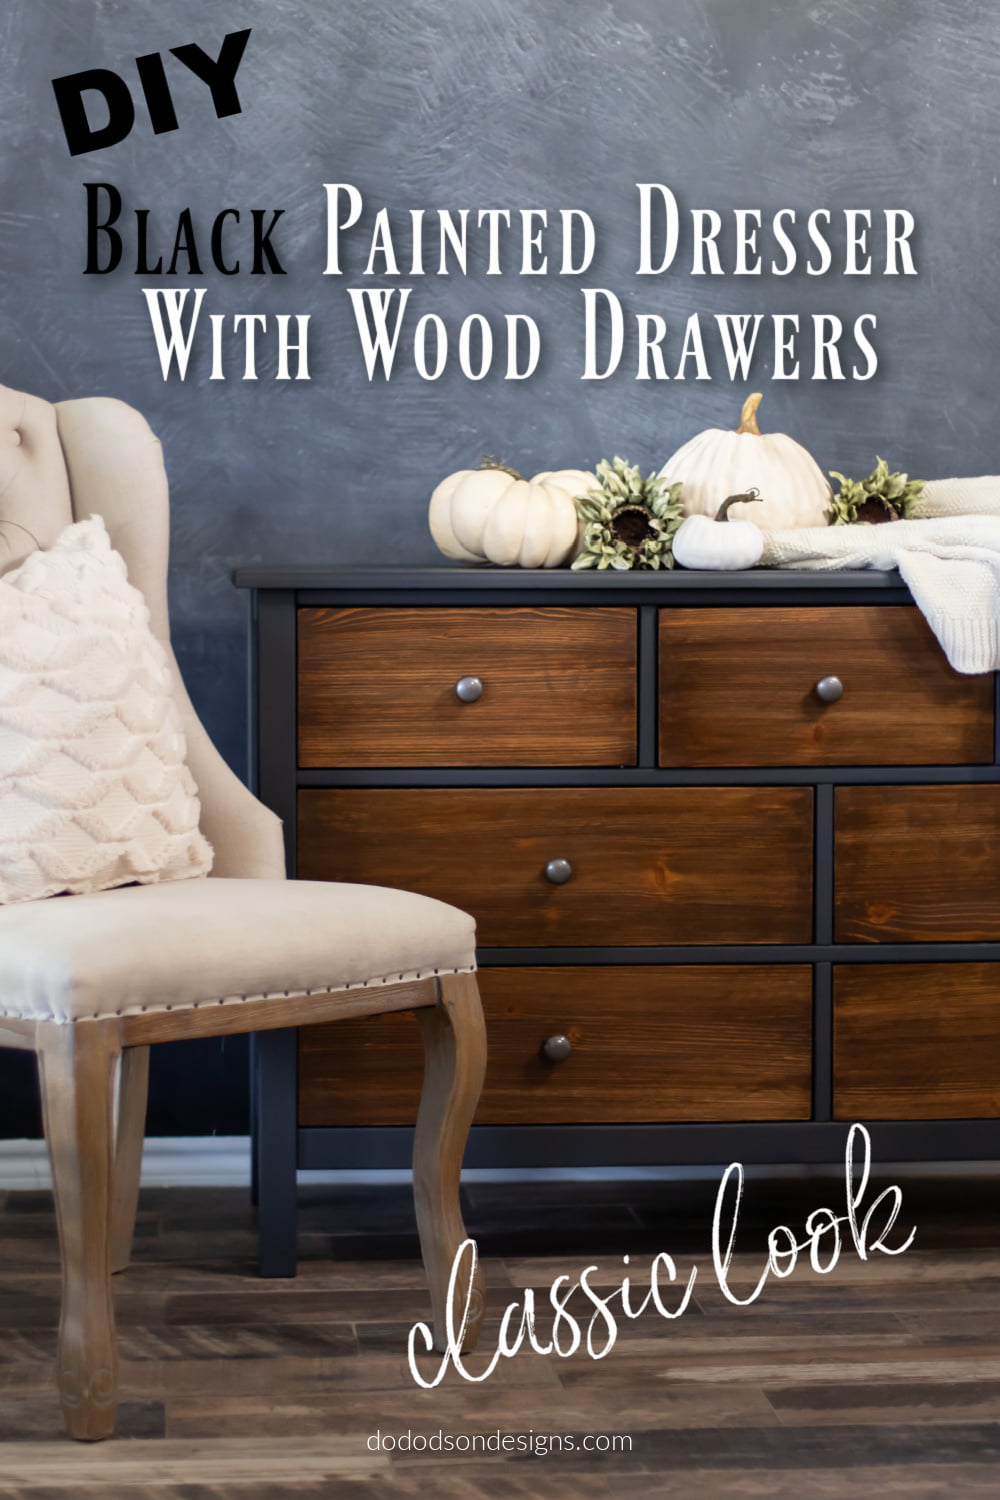 DIY Black Painted Dresser With Wood Drawers